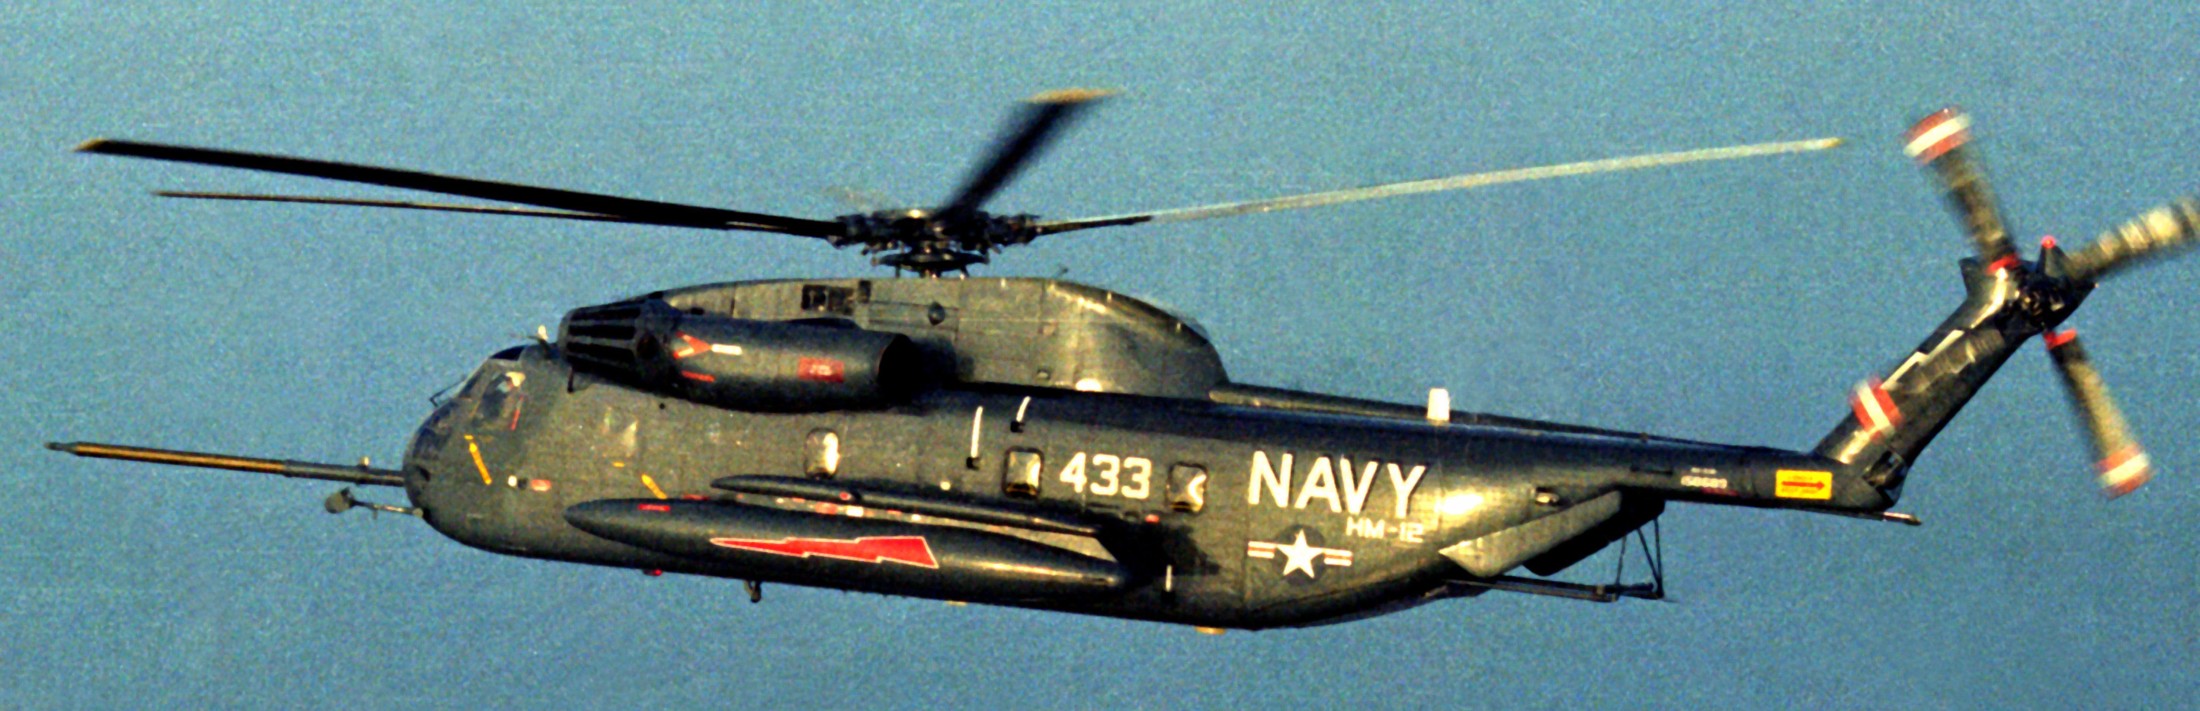 hm-12 sea dragons helicopter mine countermeasures squadron navy rh-53d sea stallion 16